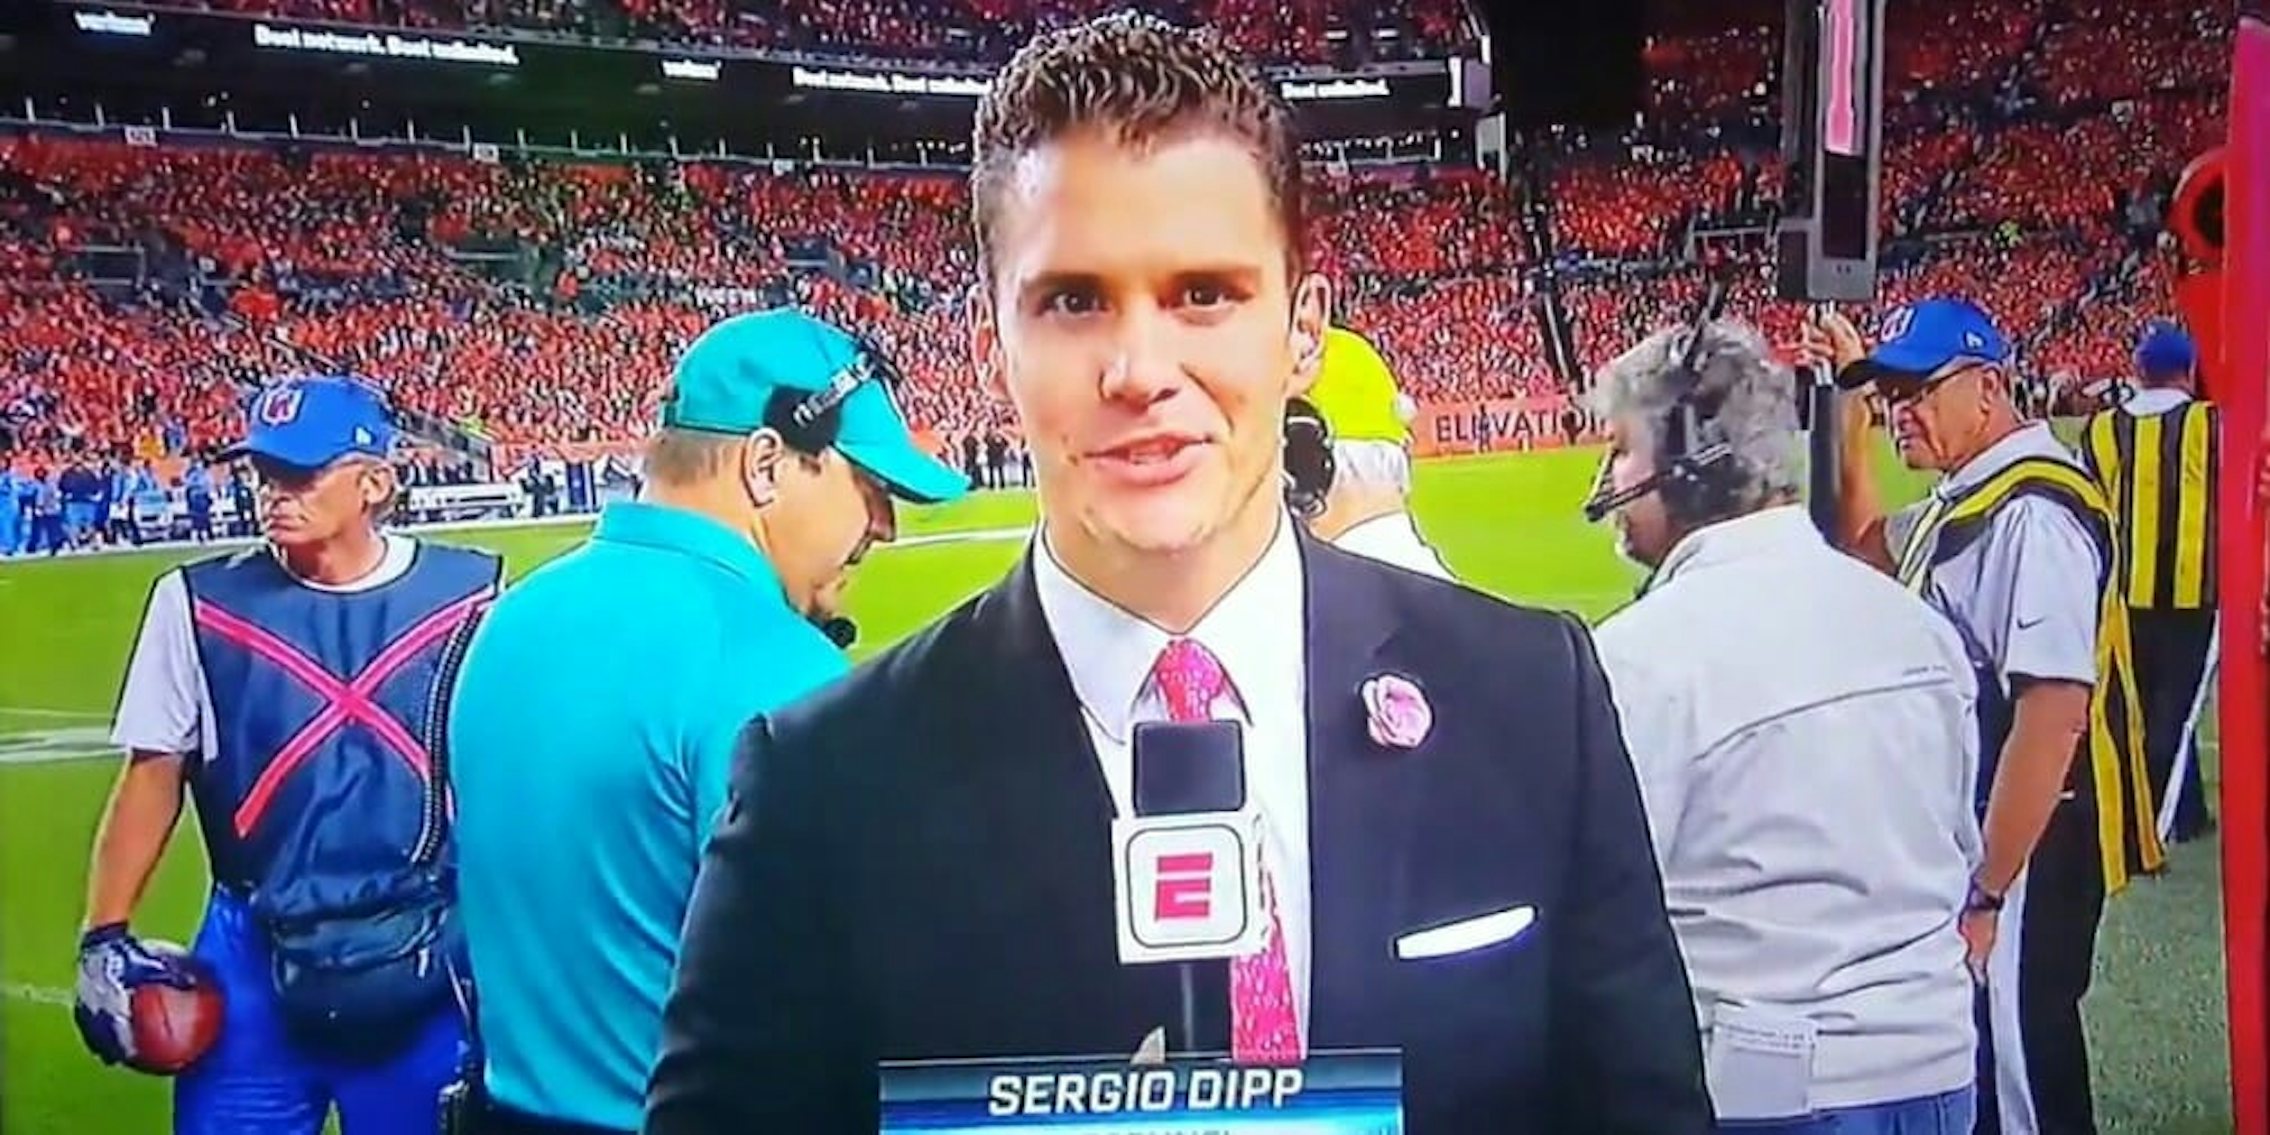 Sergio Dipp ESPN sideline reporter